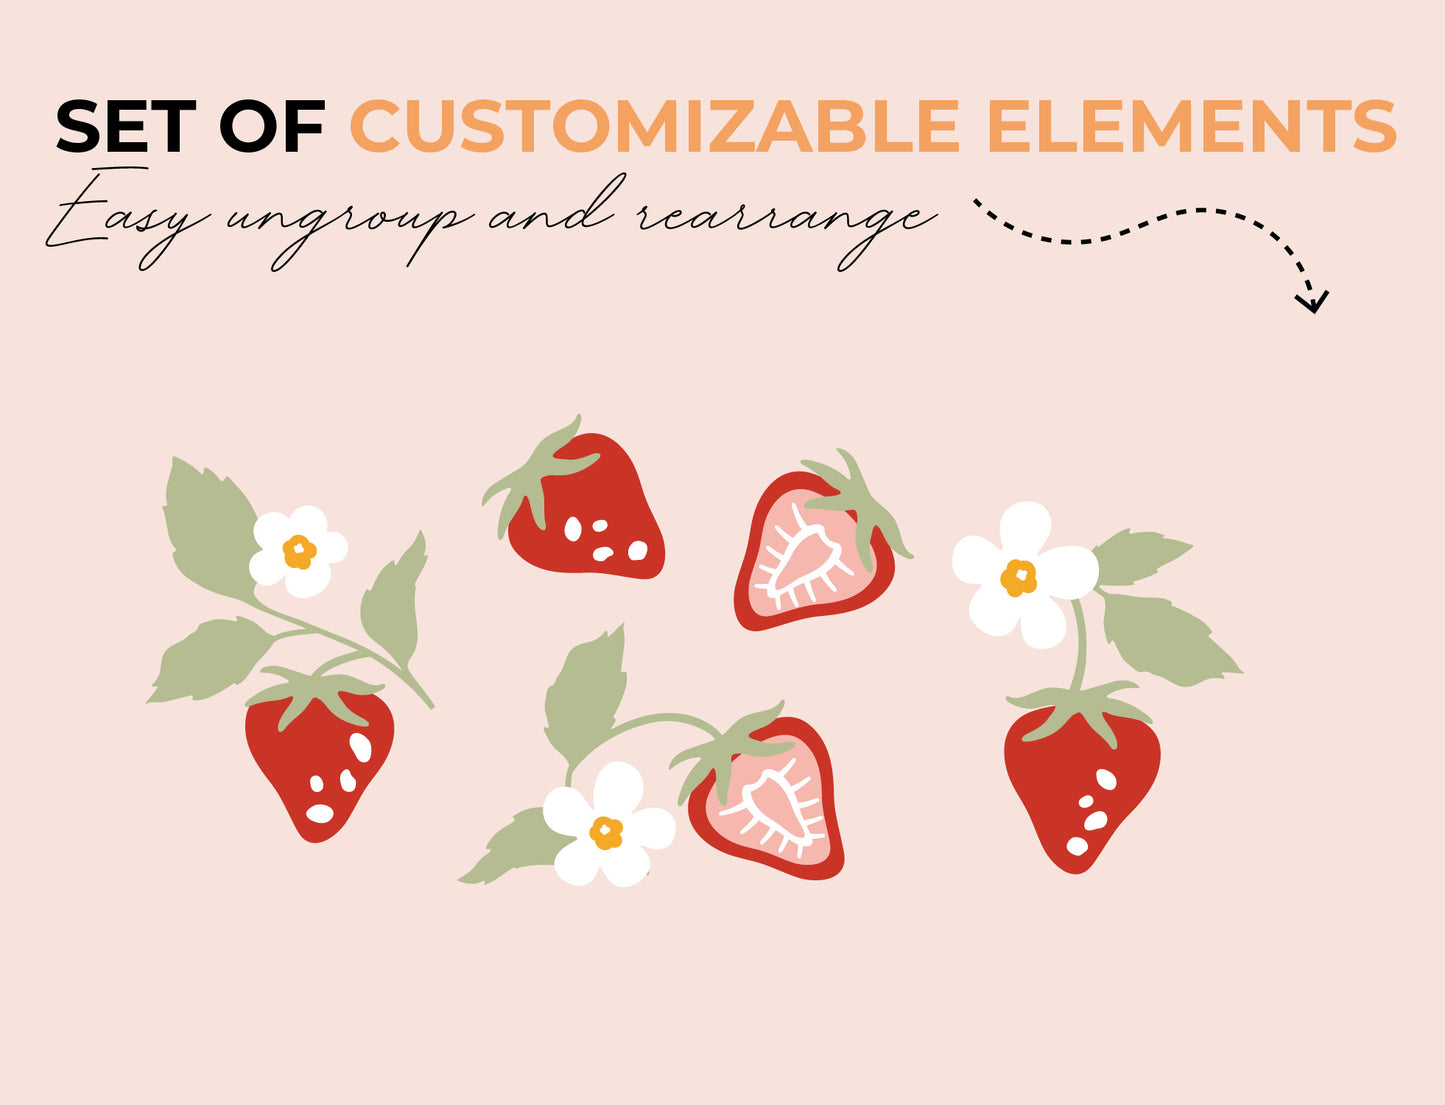 Floral Strawberry SVG Decal Set